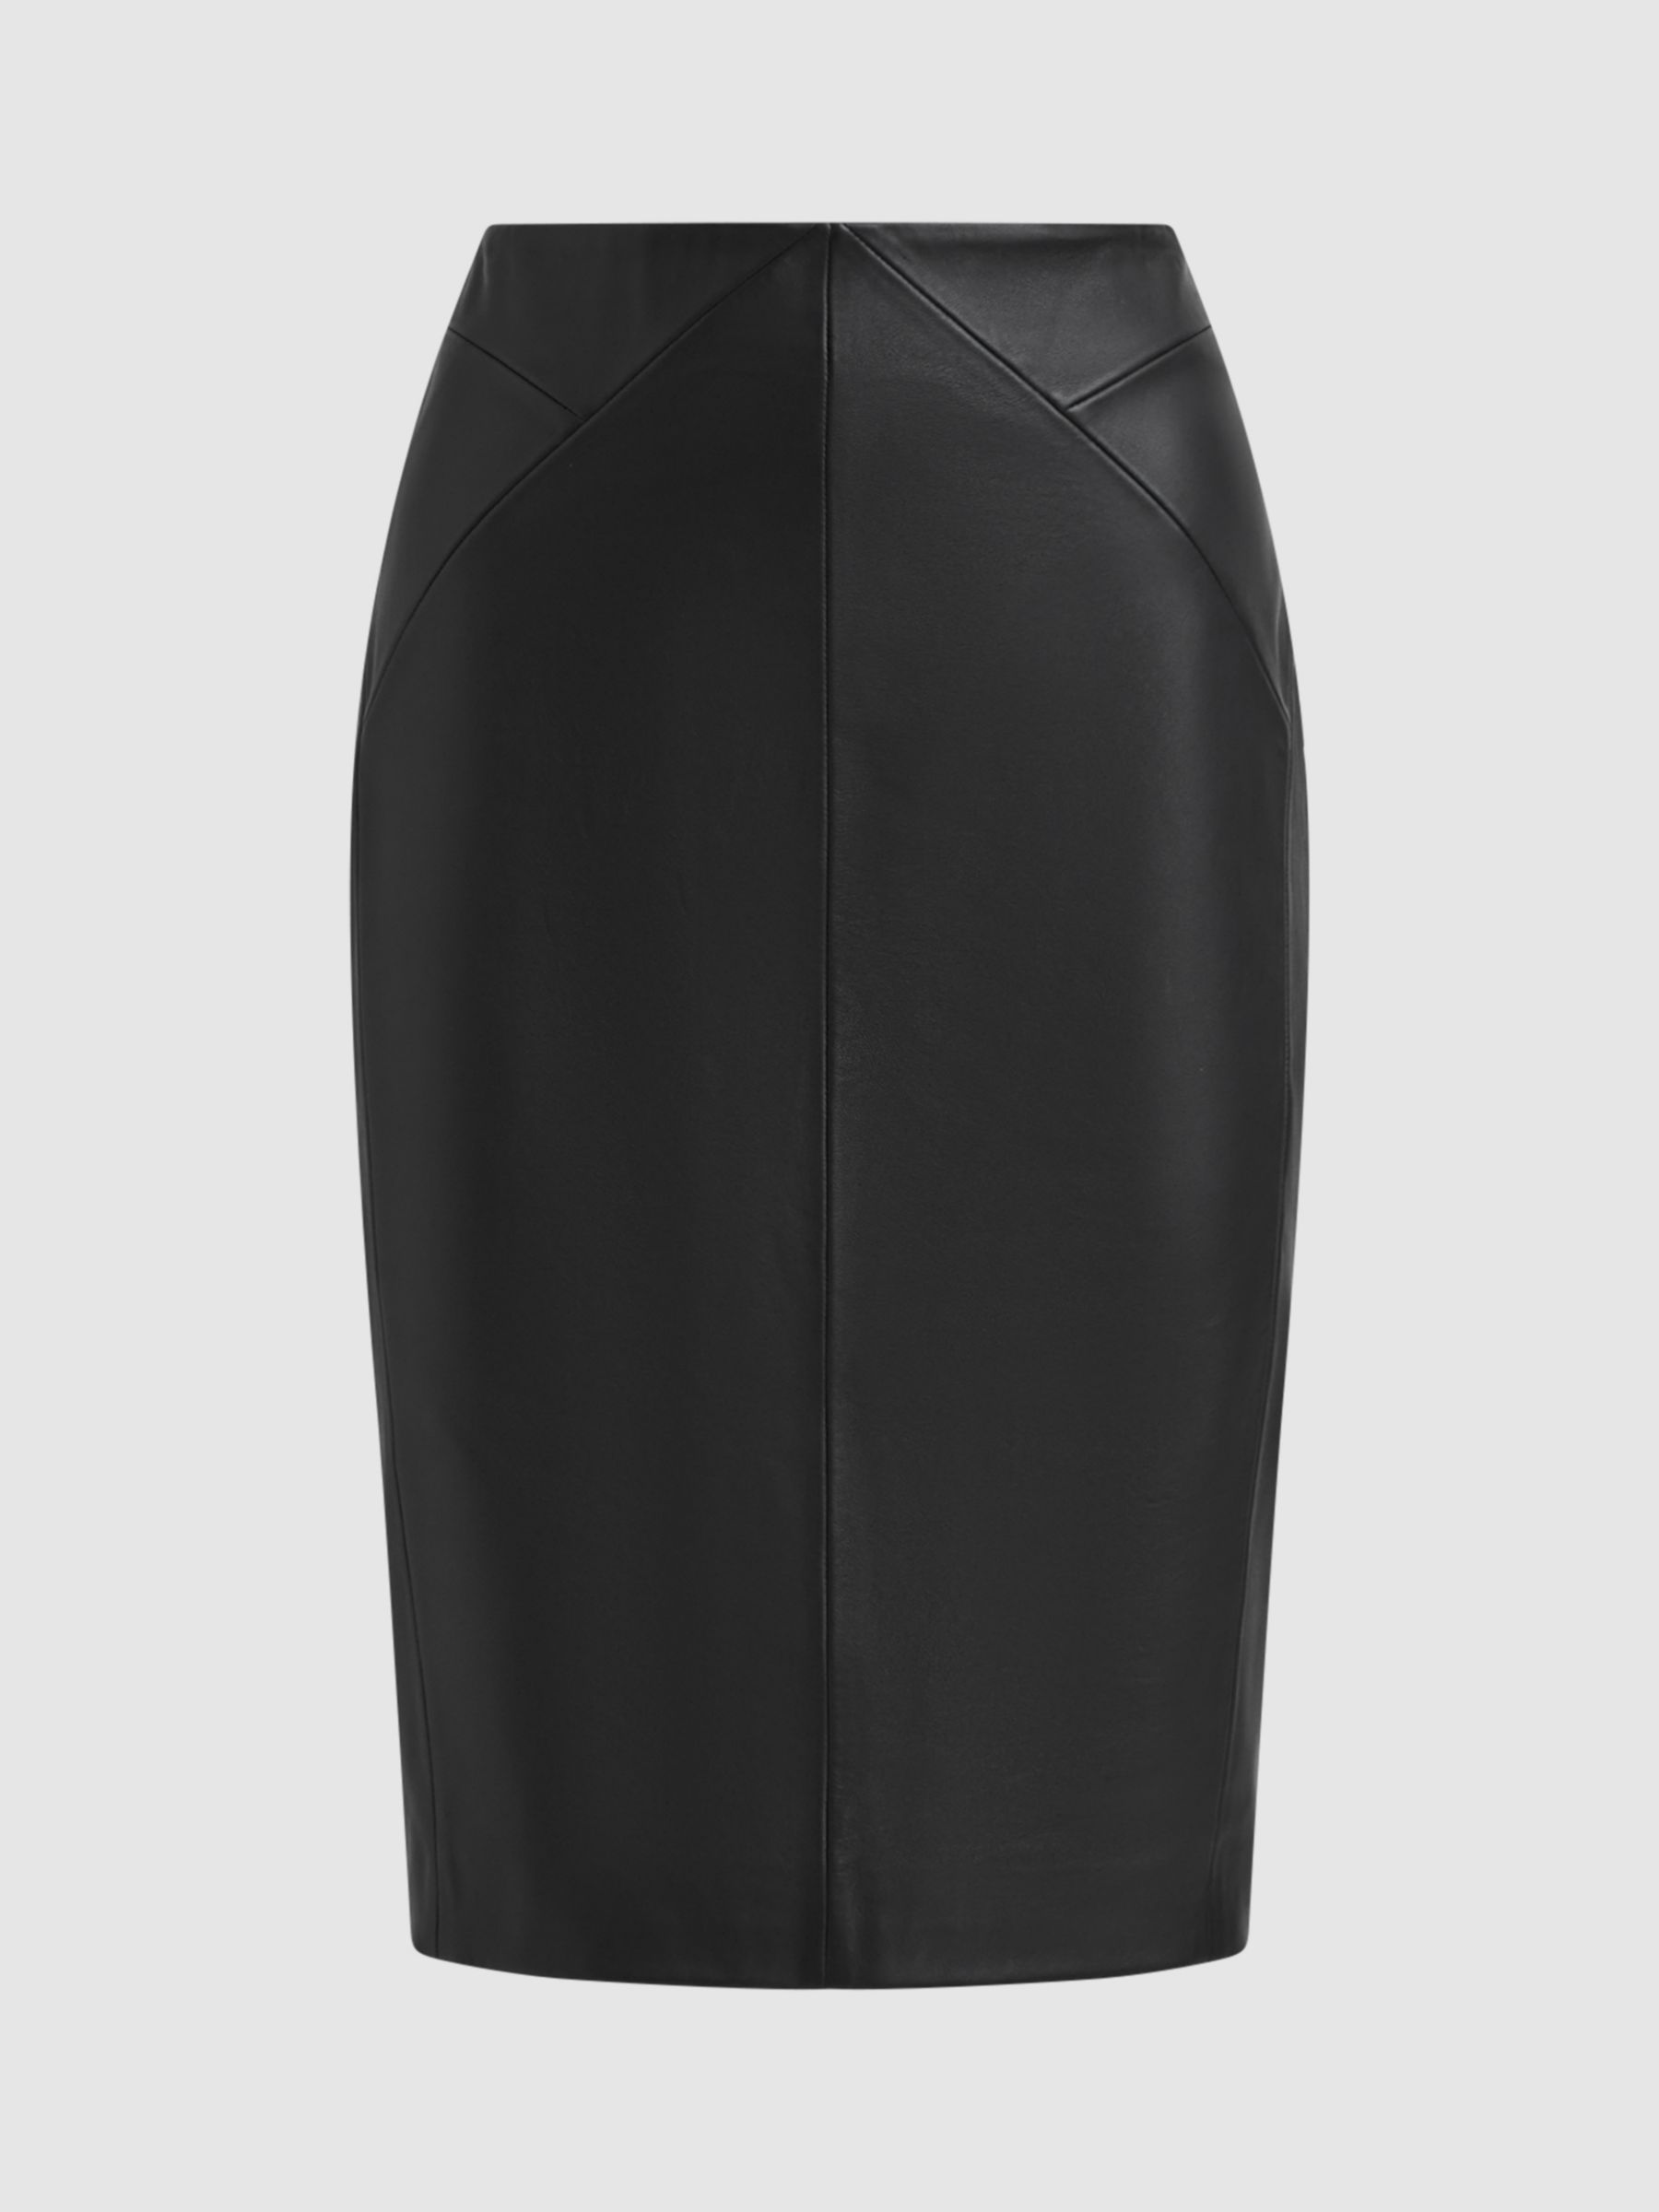 Reiss Raya Leather Pencil Skirt, Black, 12